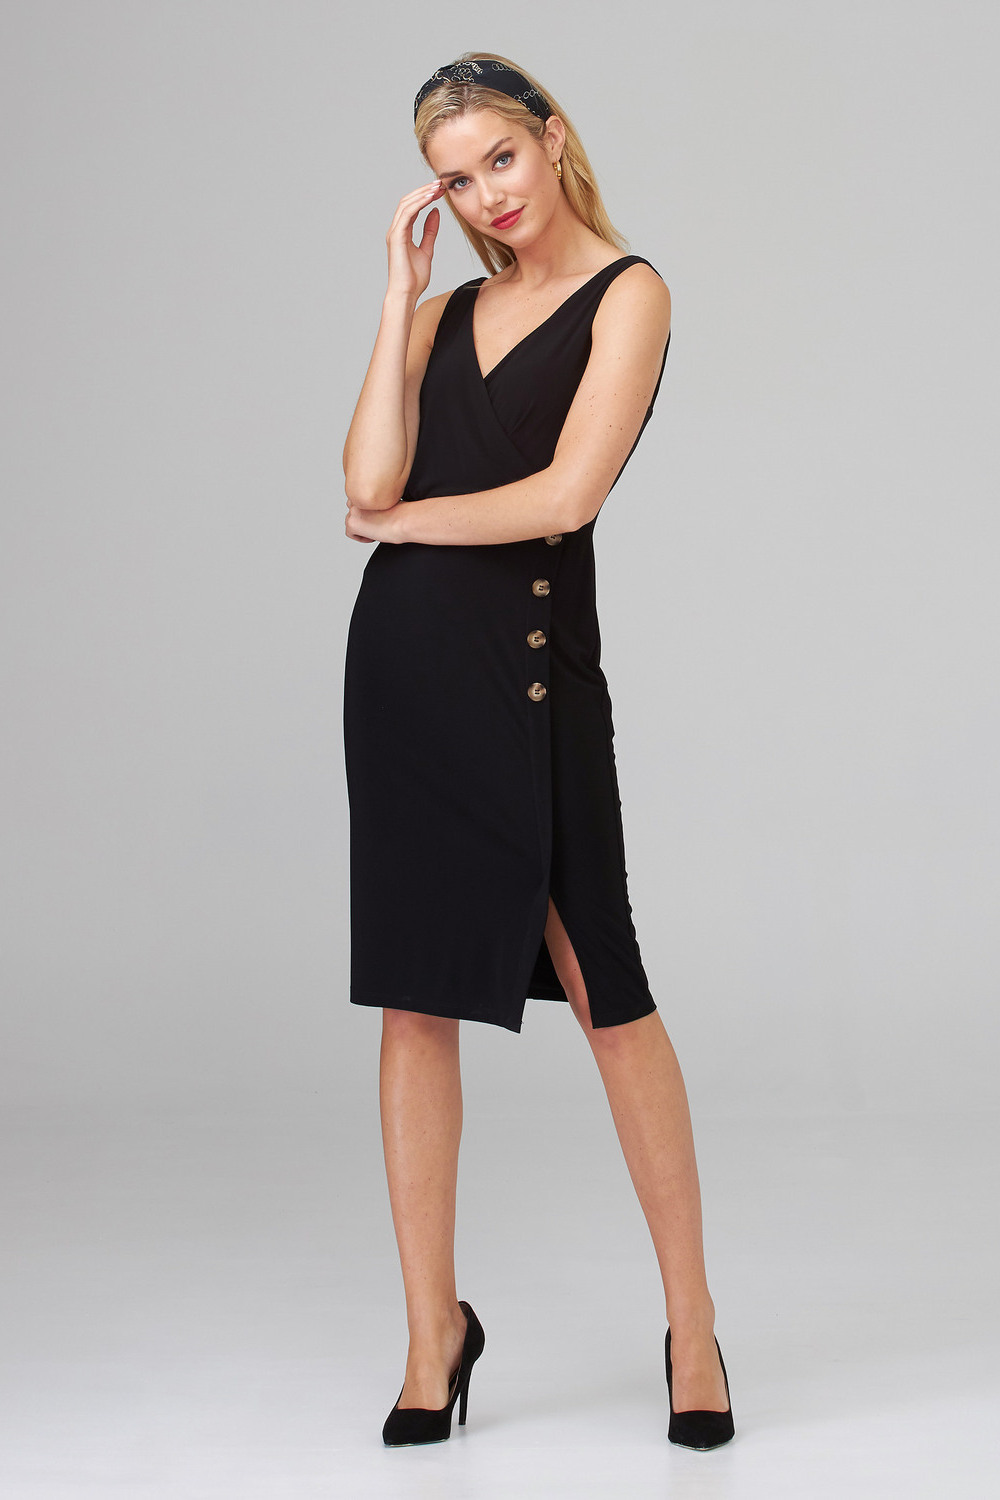 Joseph Ribkoff Dress Style 202222. Black